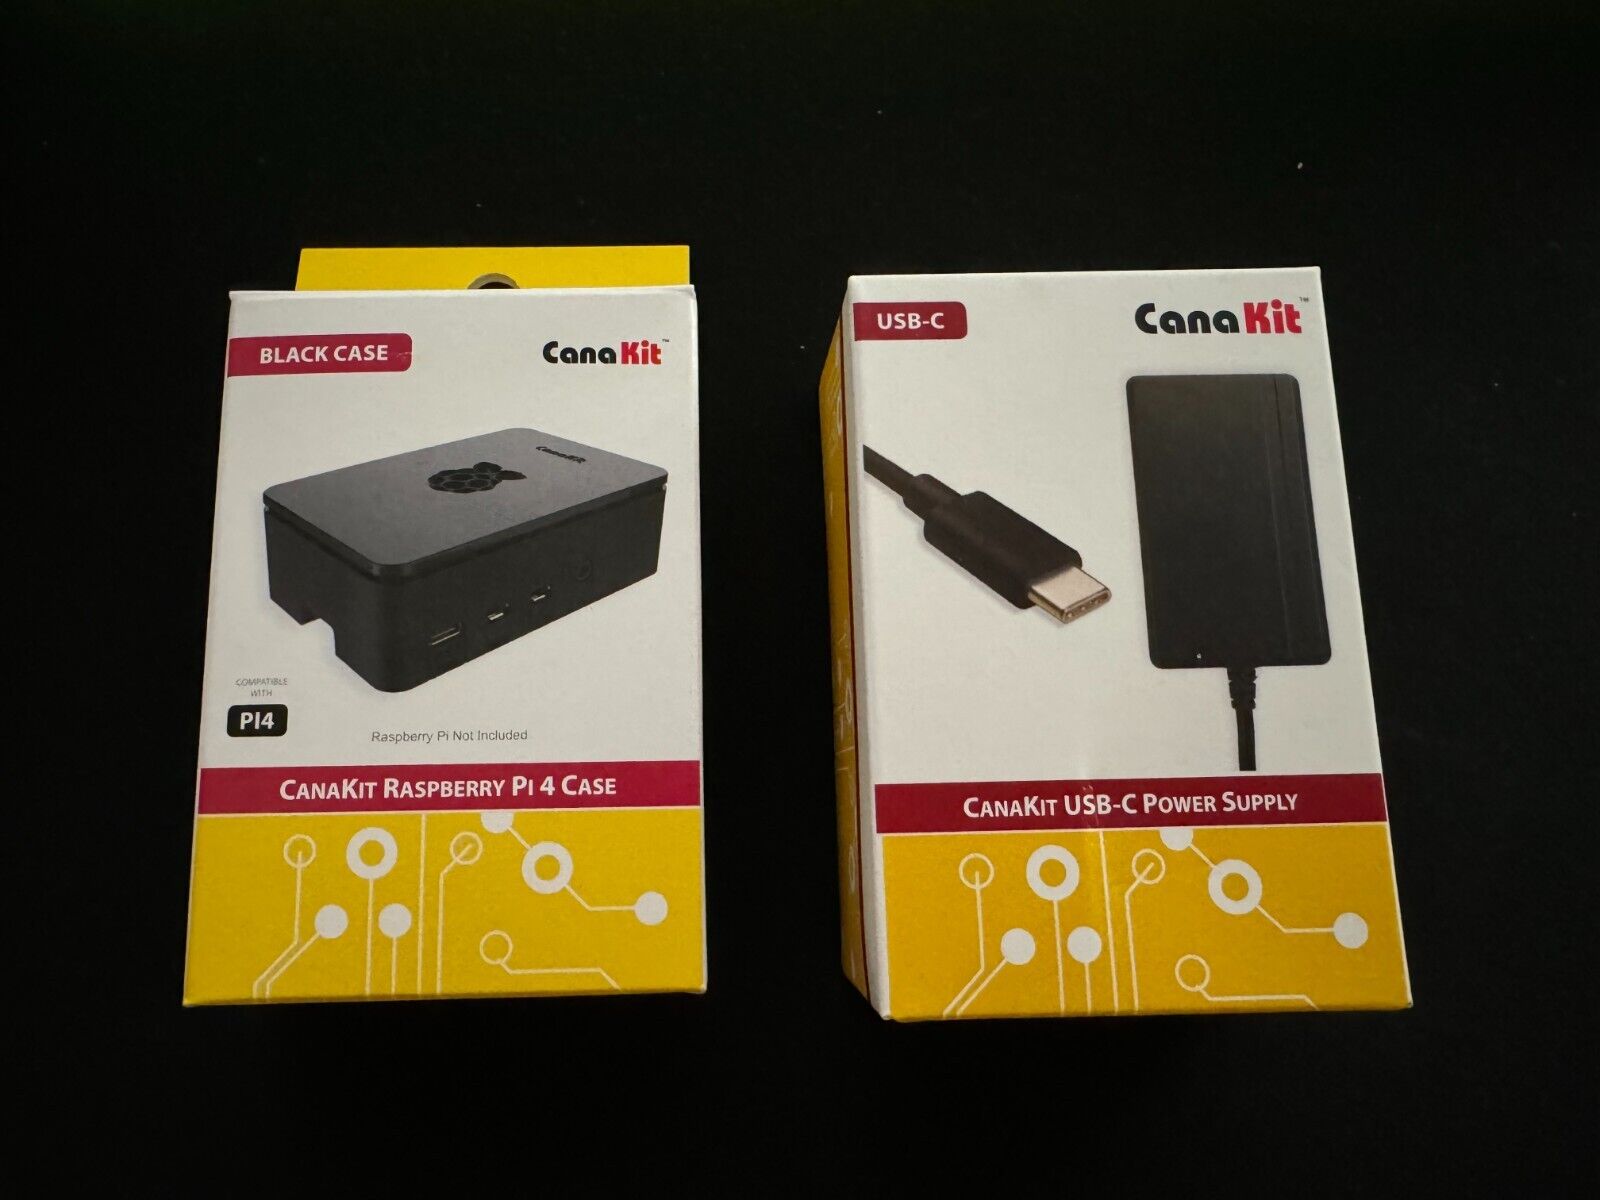 Canakit 3.5A Raspberry Pi 4 Power Supply (Usb-C) + CanaKit Raspberry Pi 4 Case